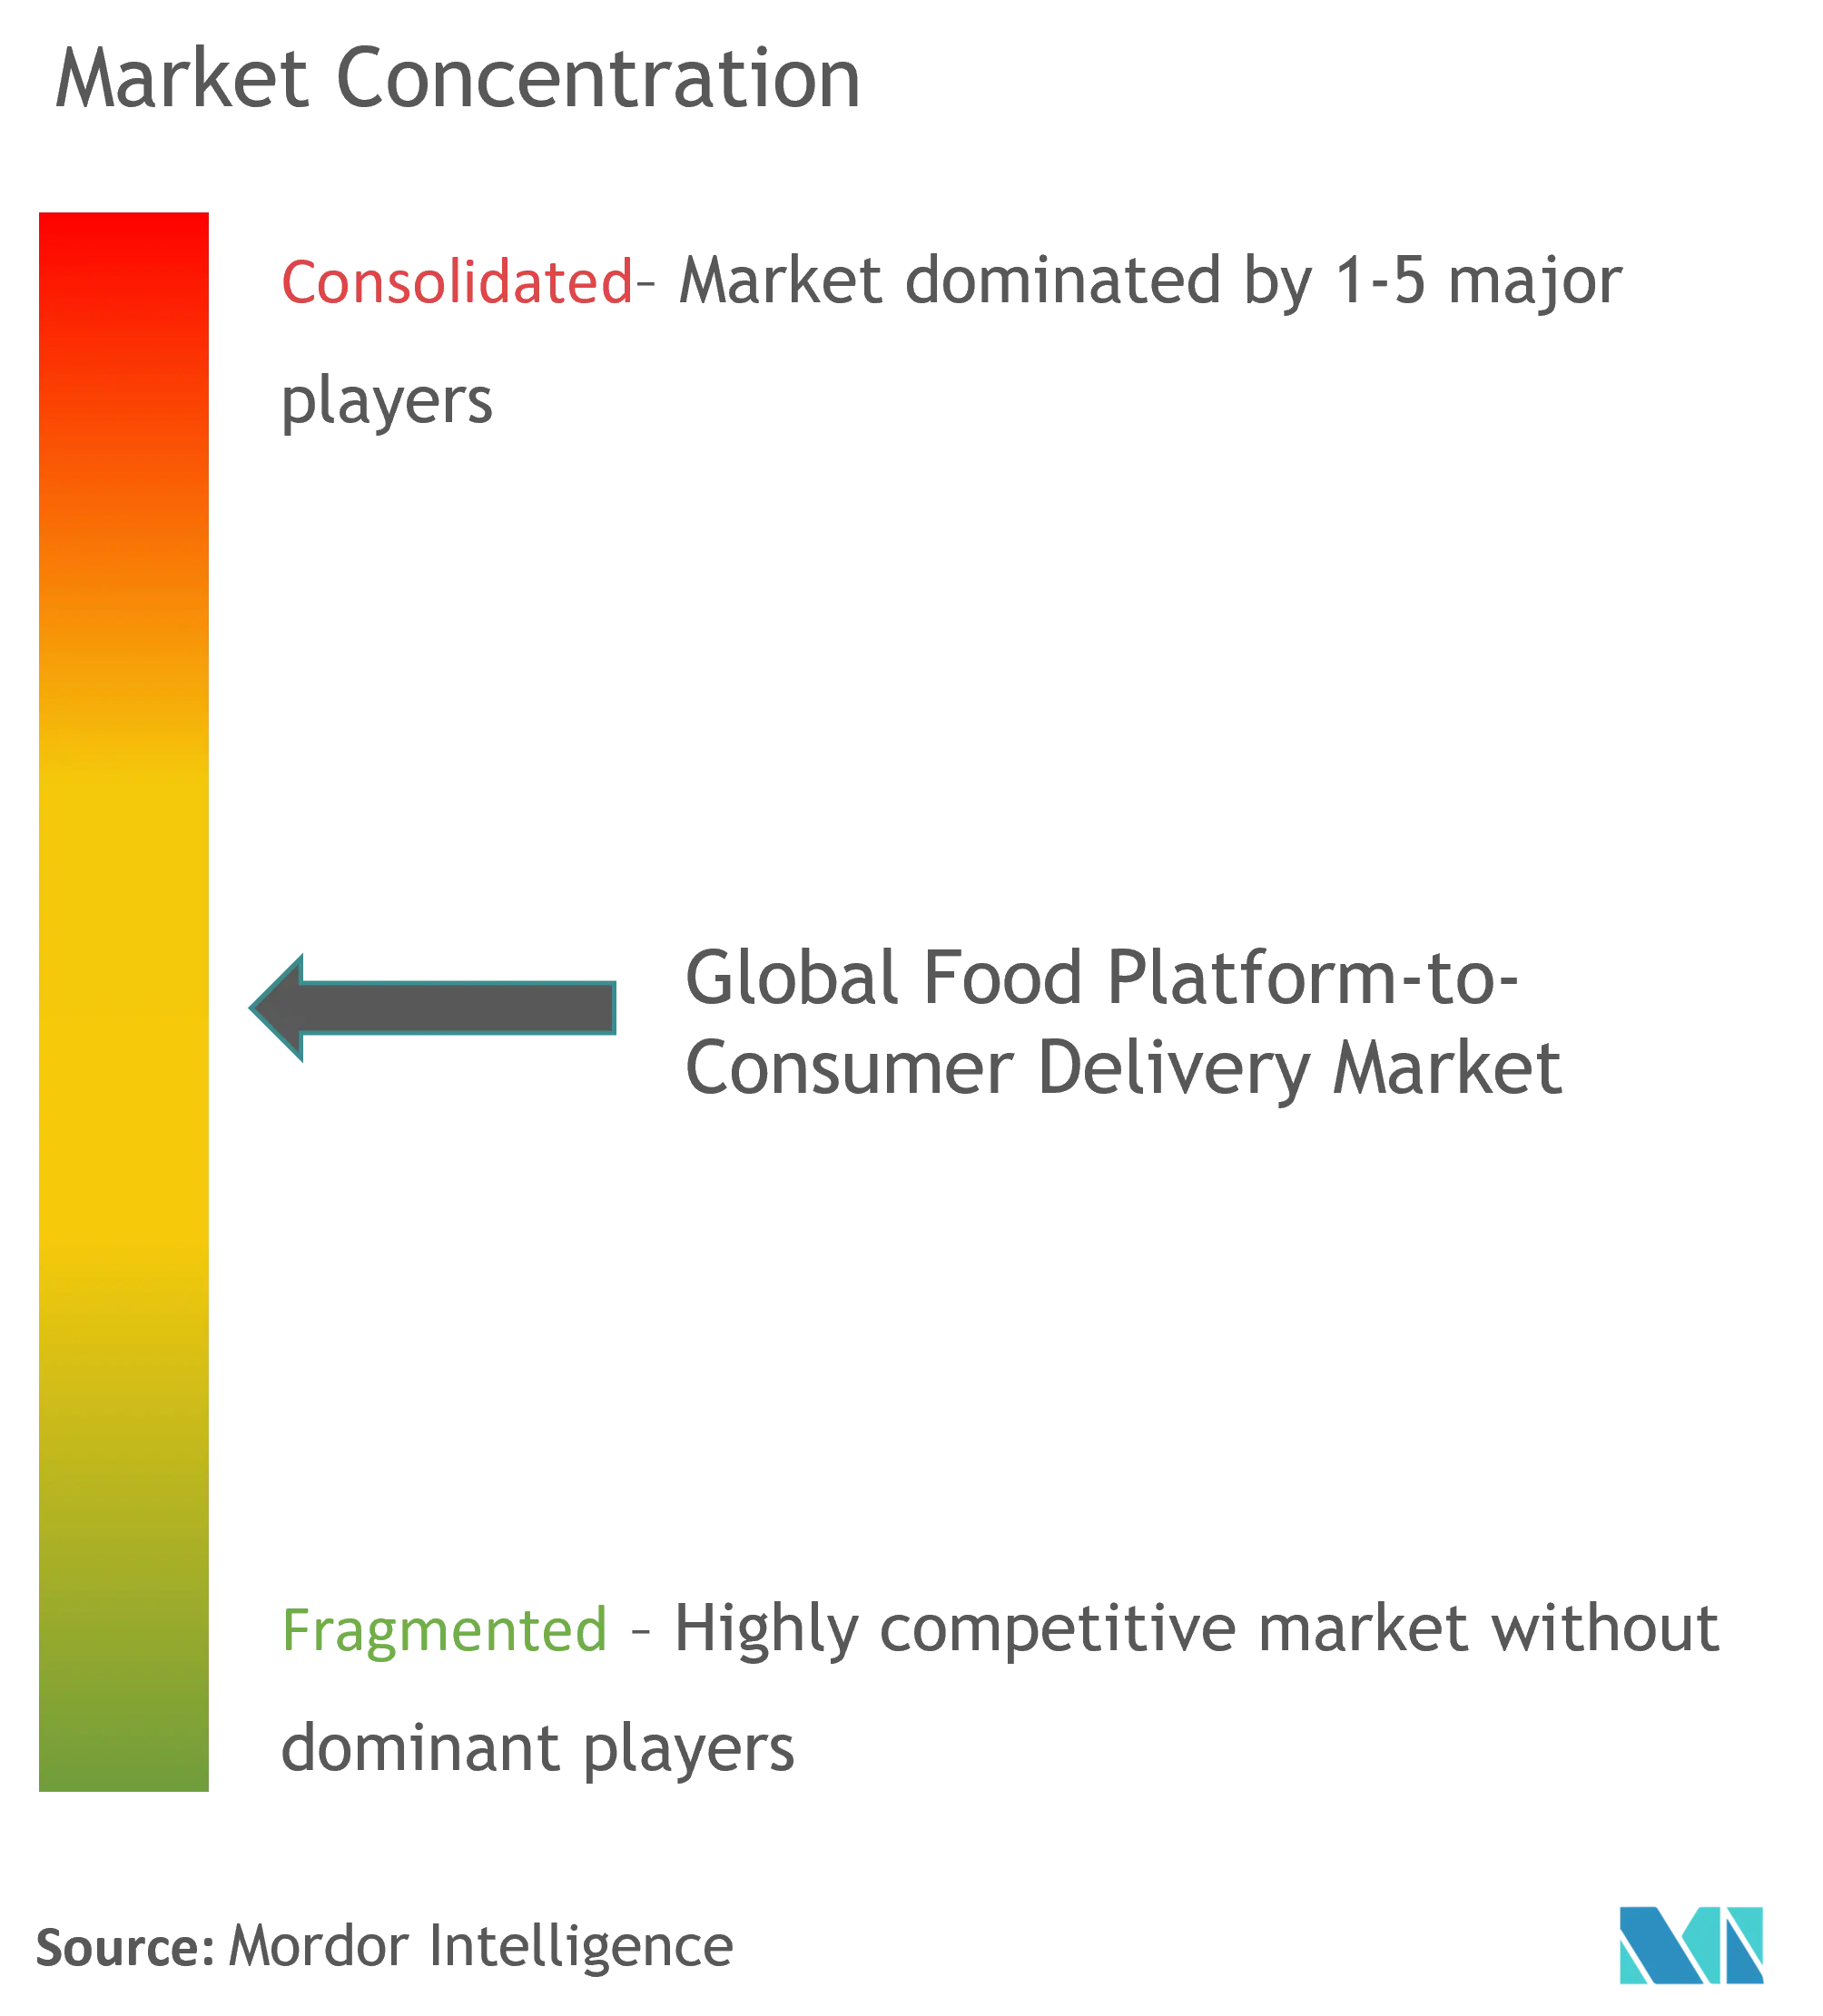 Global Food Platform-to-Consumer Delivery Market Concentration